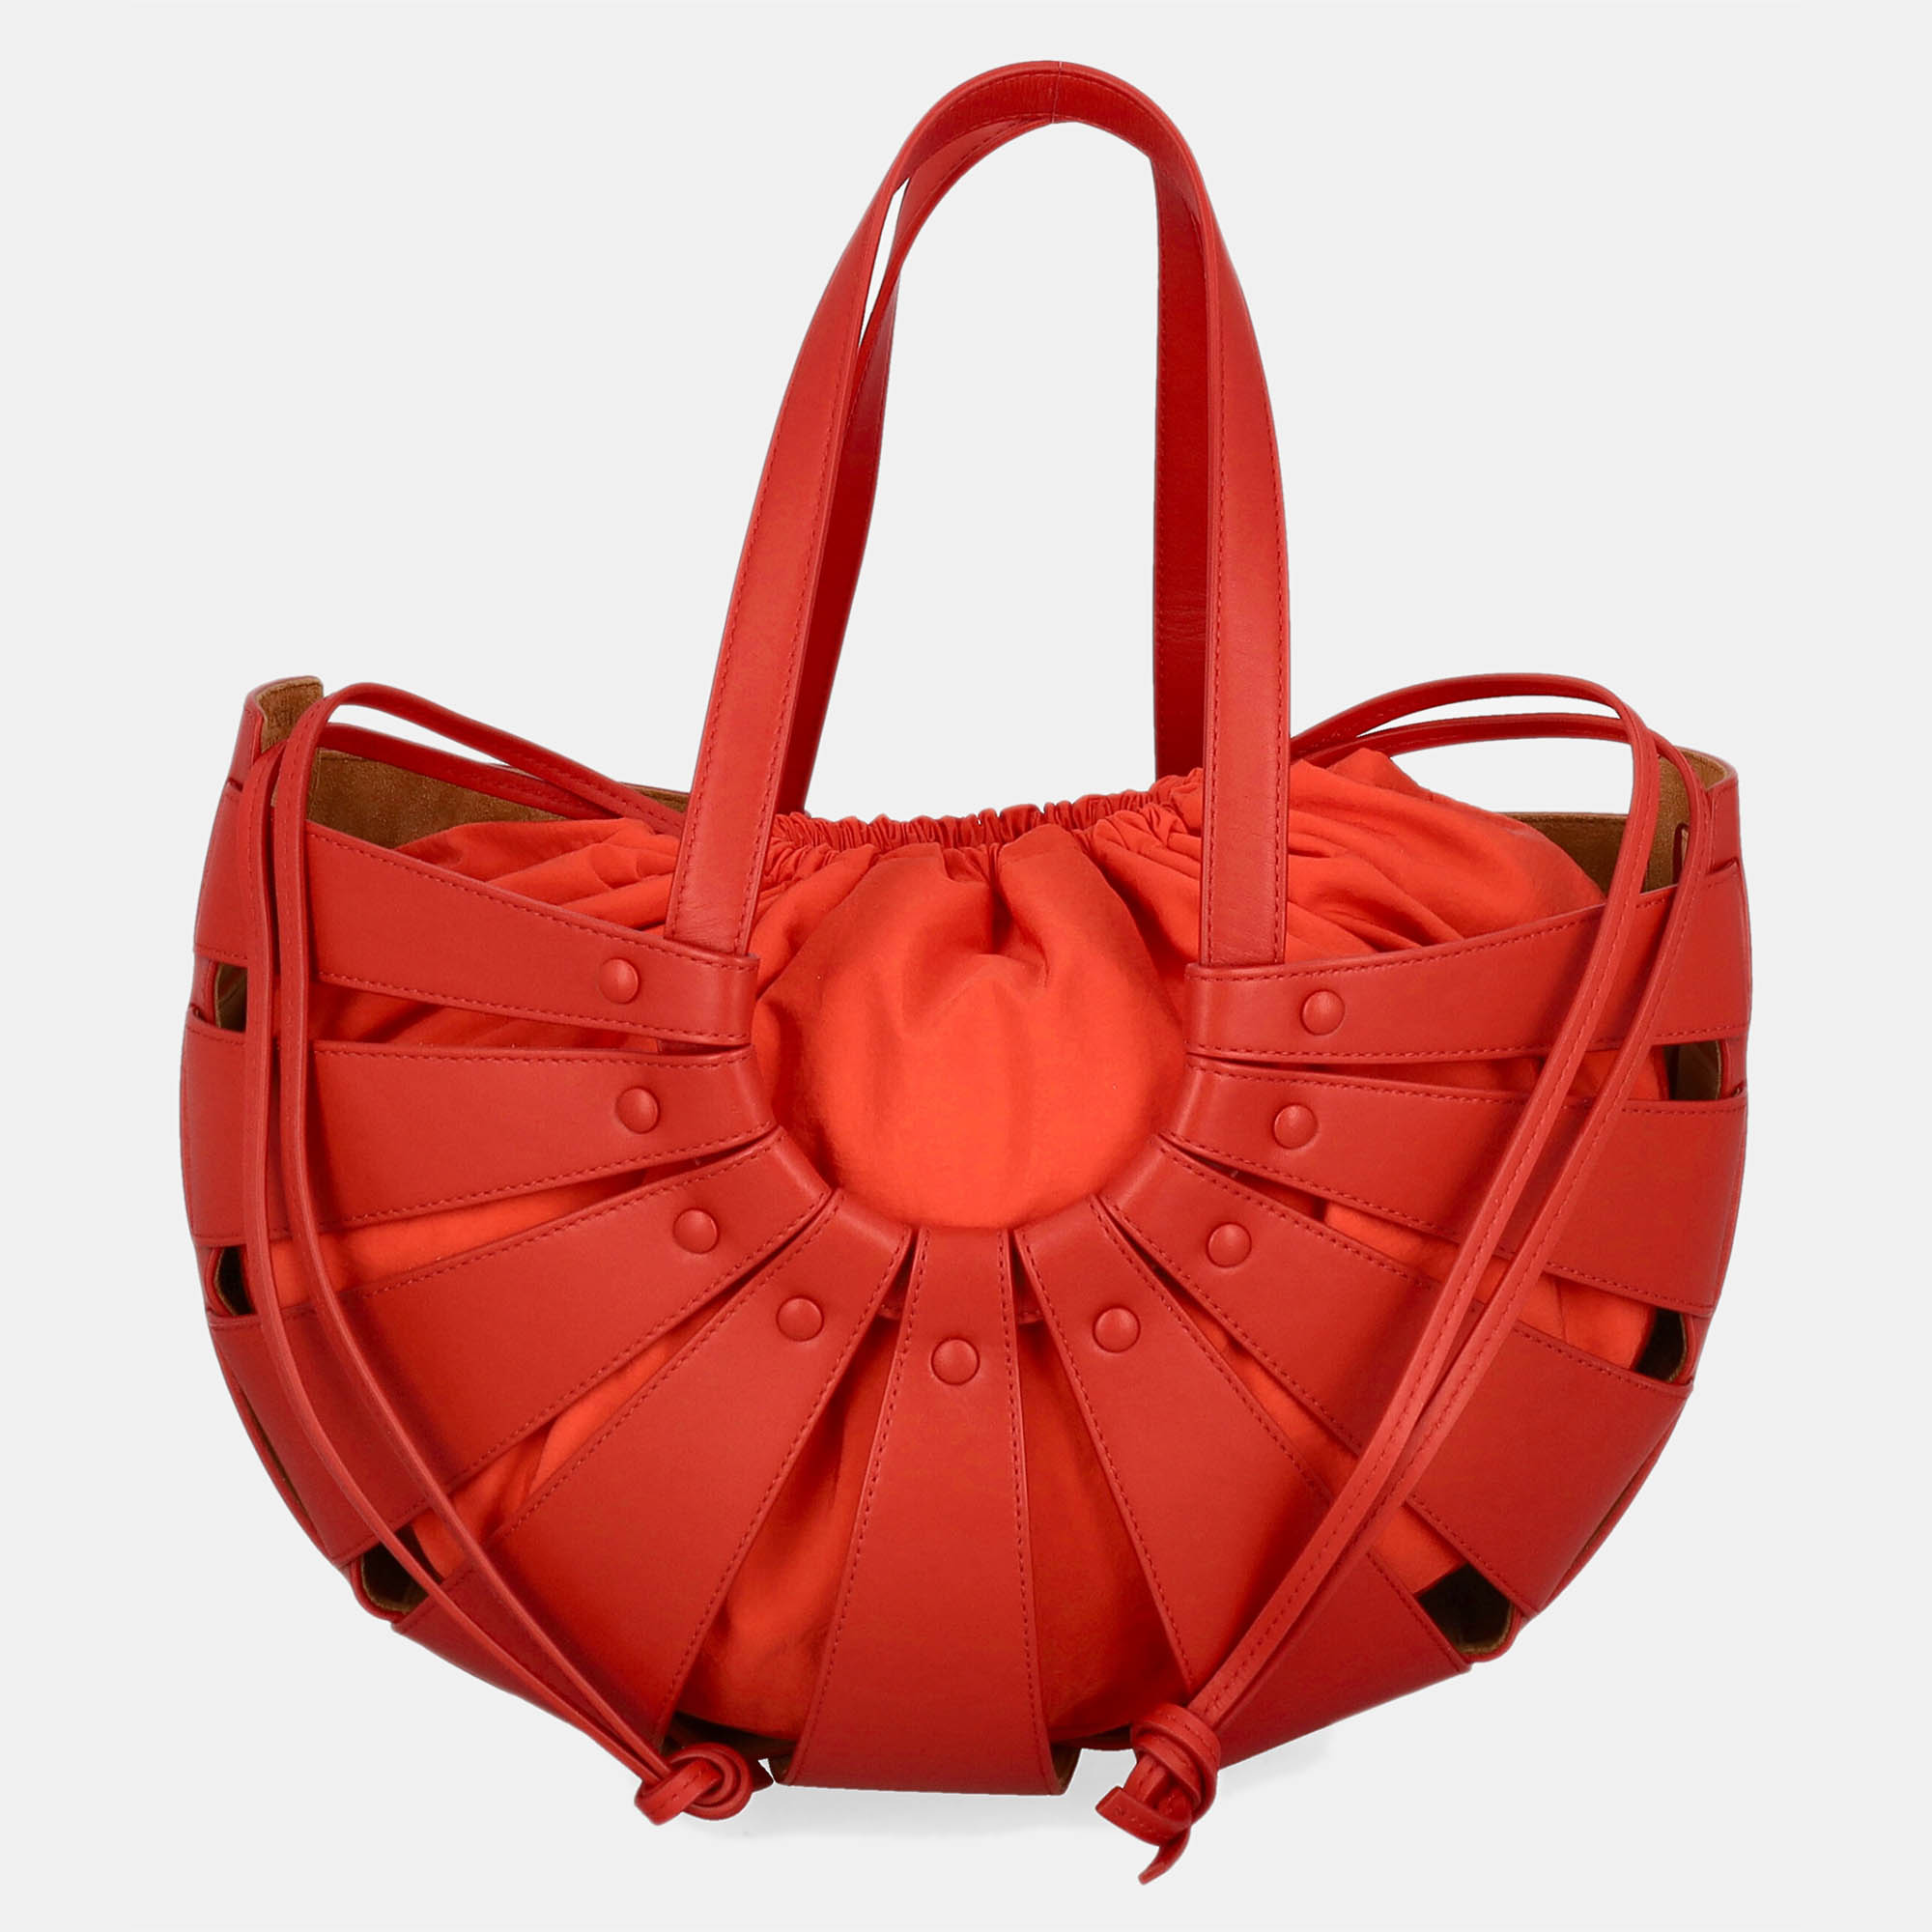 Bottega Veneta  Women's Leather Handbag - Red - One Size